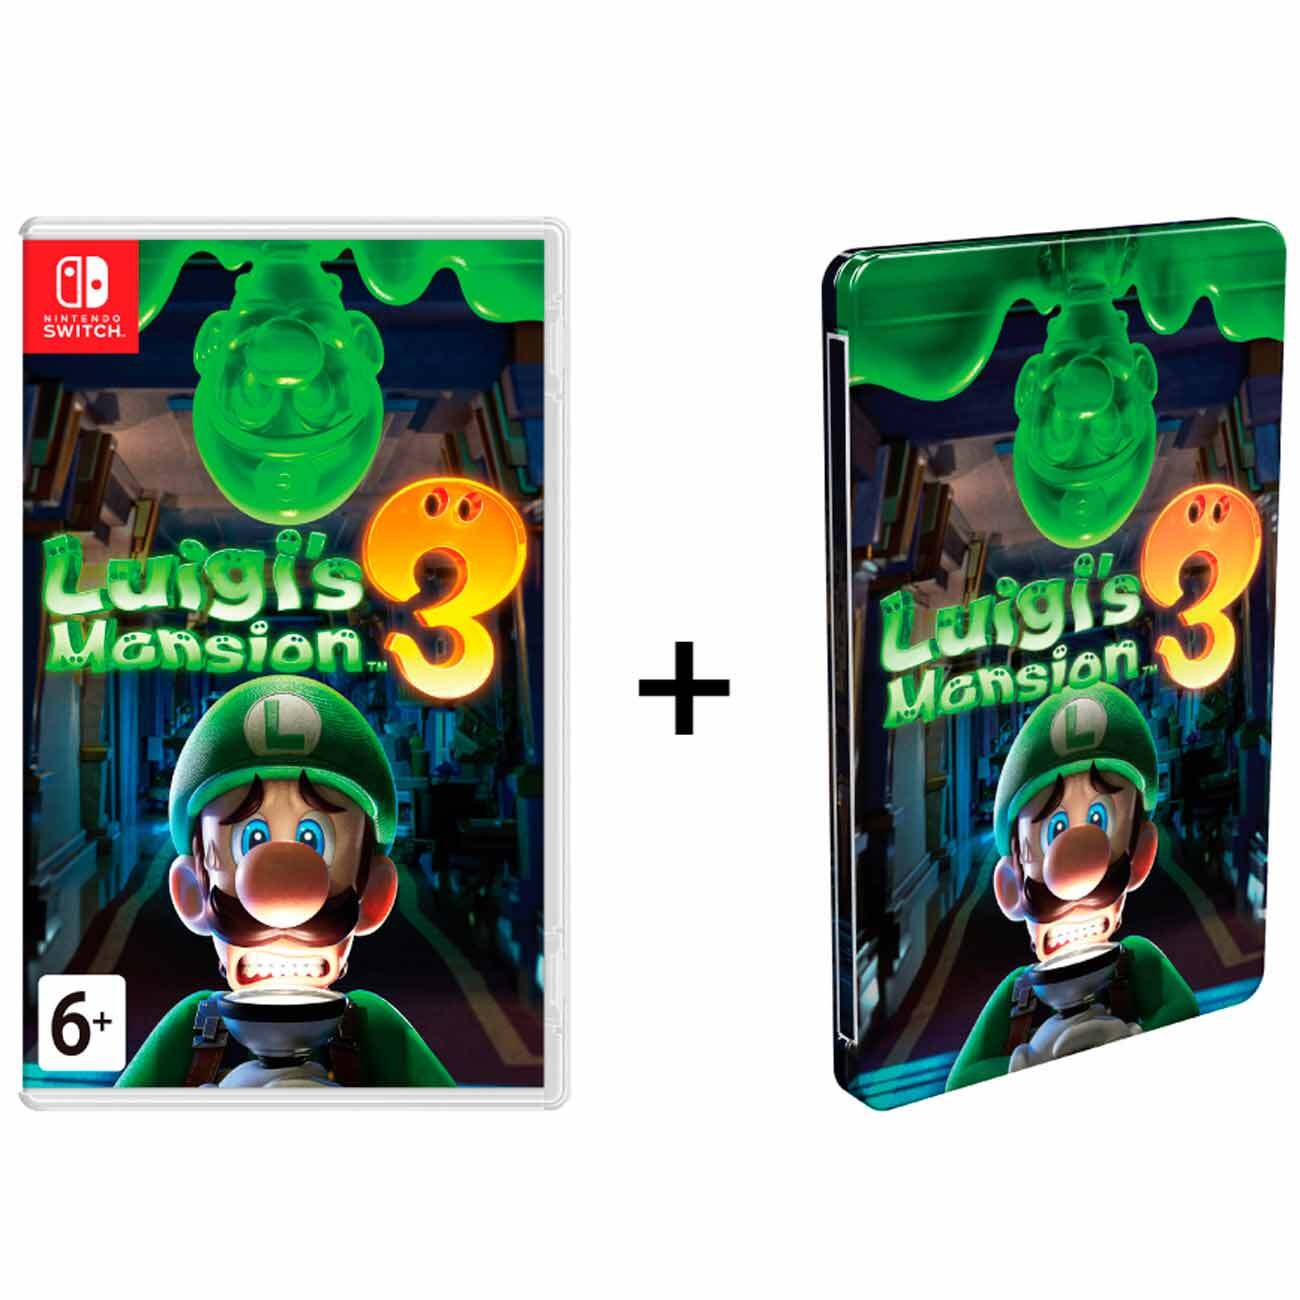 Luigi nintendo switch. Луиджи Нинтендо свитч. Luigi's Mansion 3 Нинтендо свитч. Нинтендо свитч игры про Луиджи. Игра для Nintendo Switch Nintendo Luigi's Mansion 3.